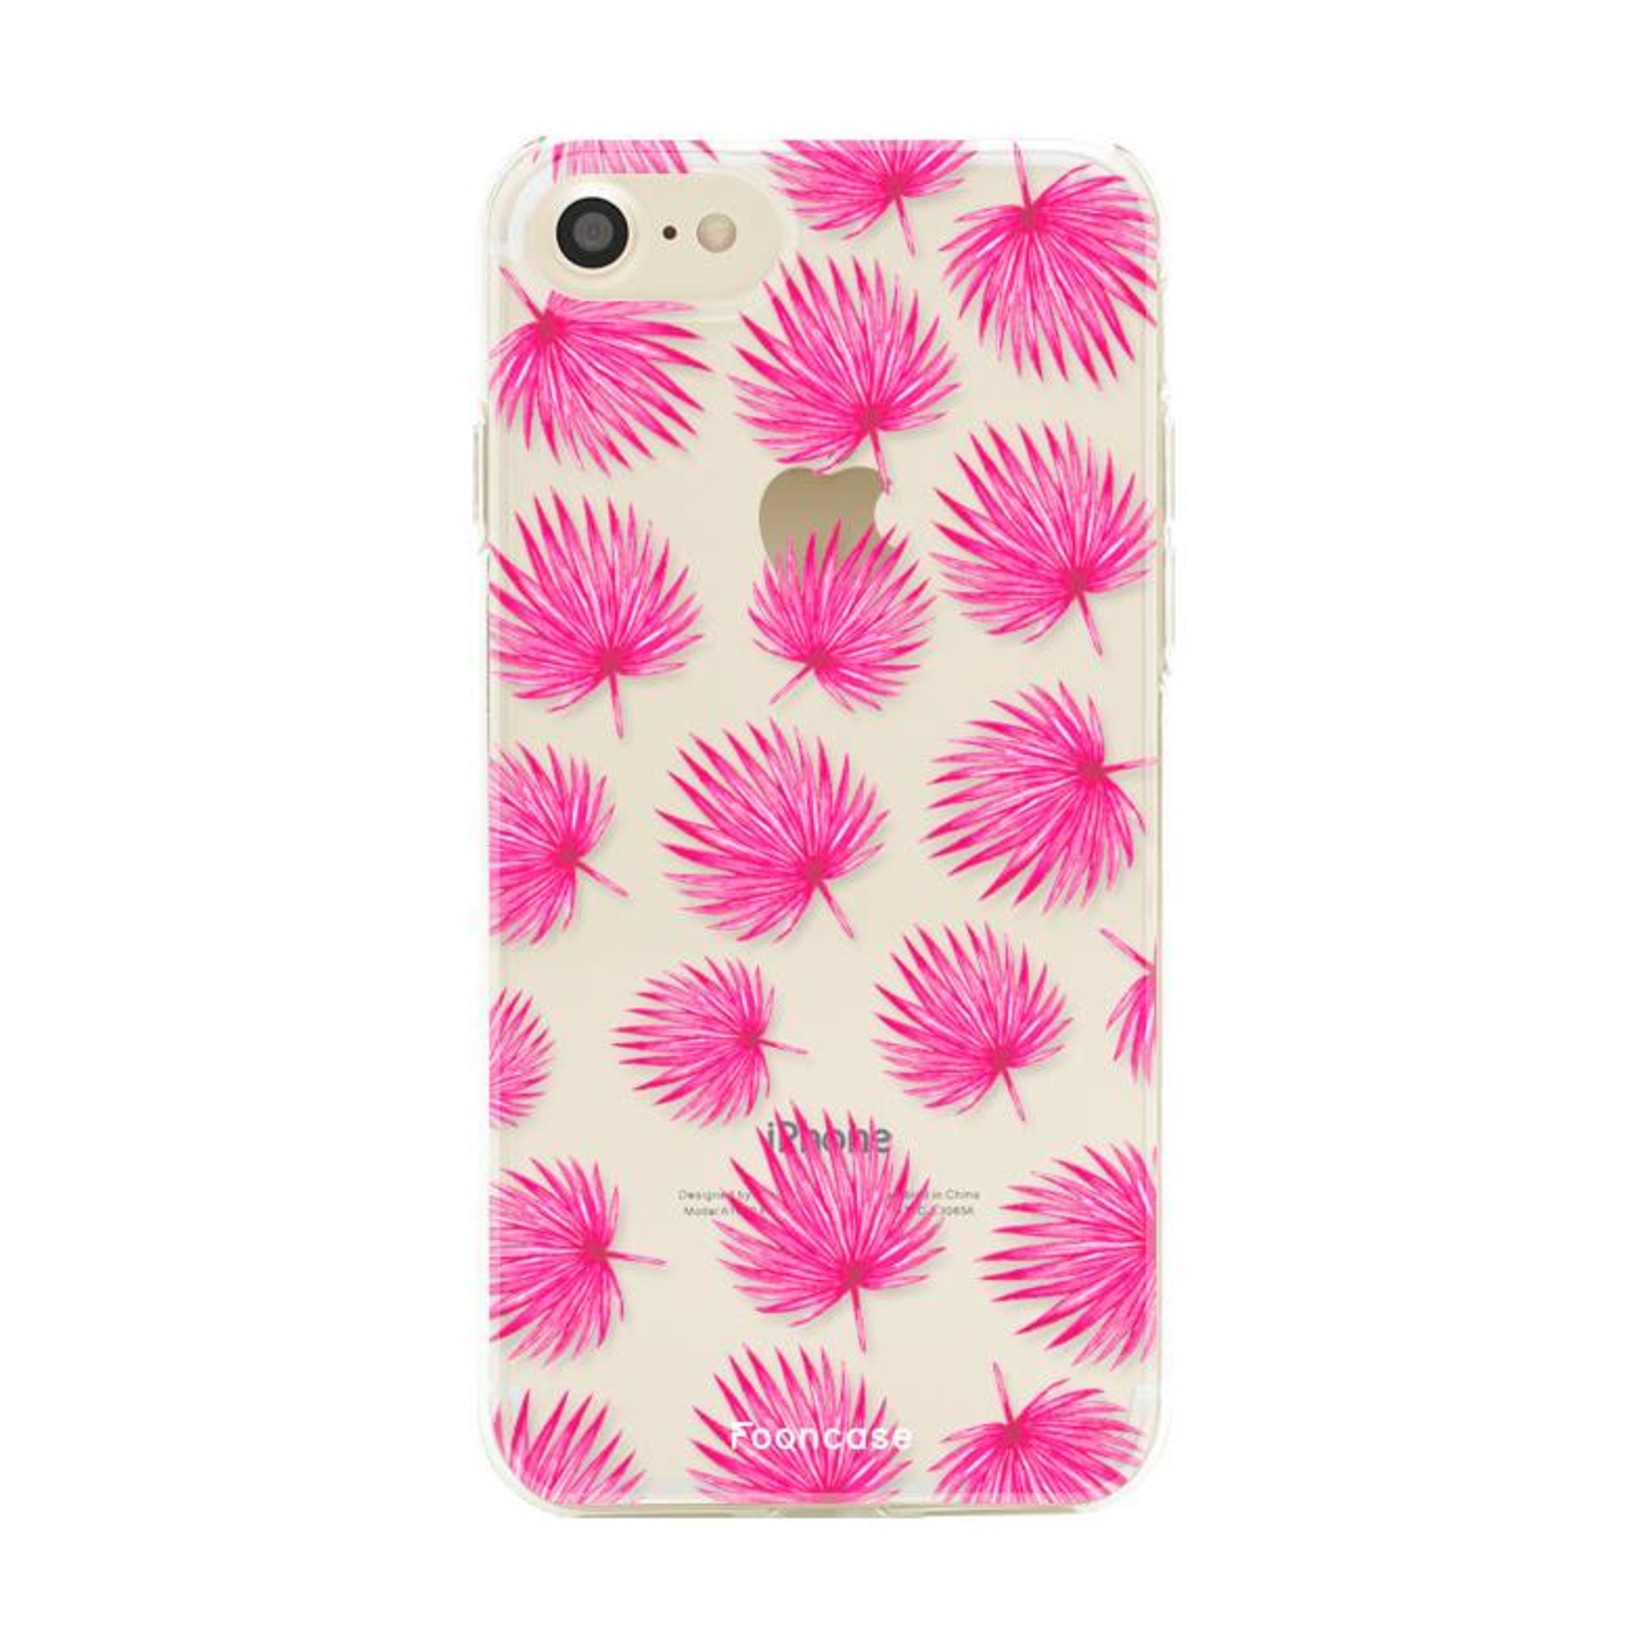 FOONCASE Iphone 8 Case - Pink leaves